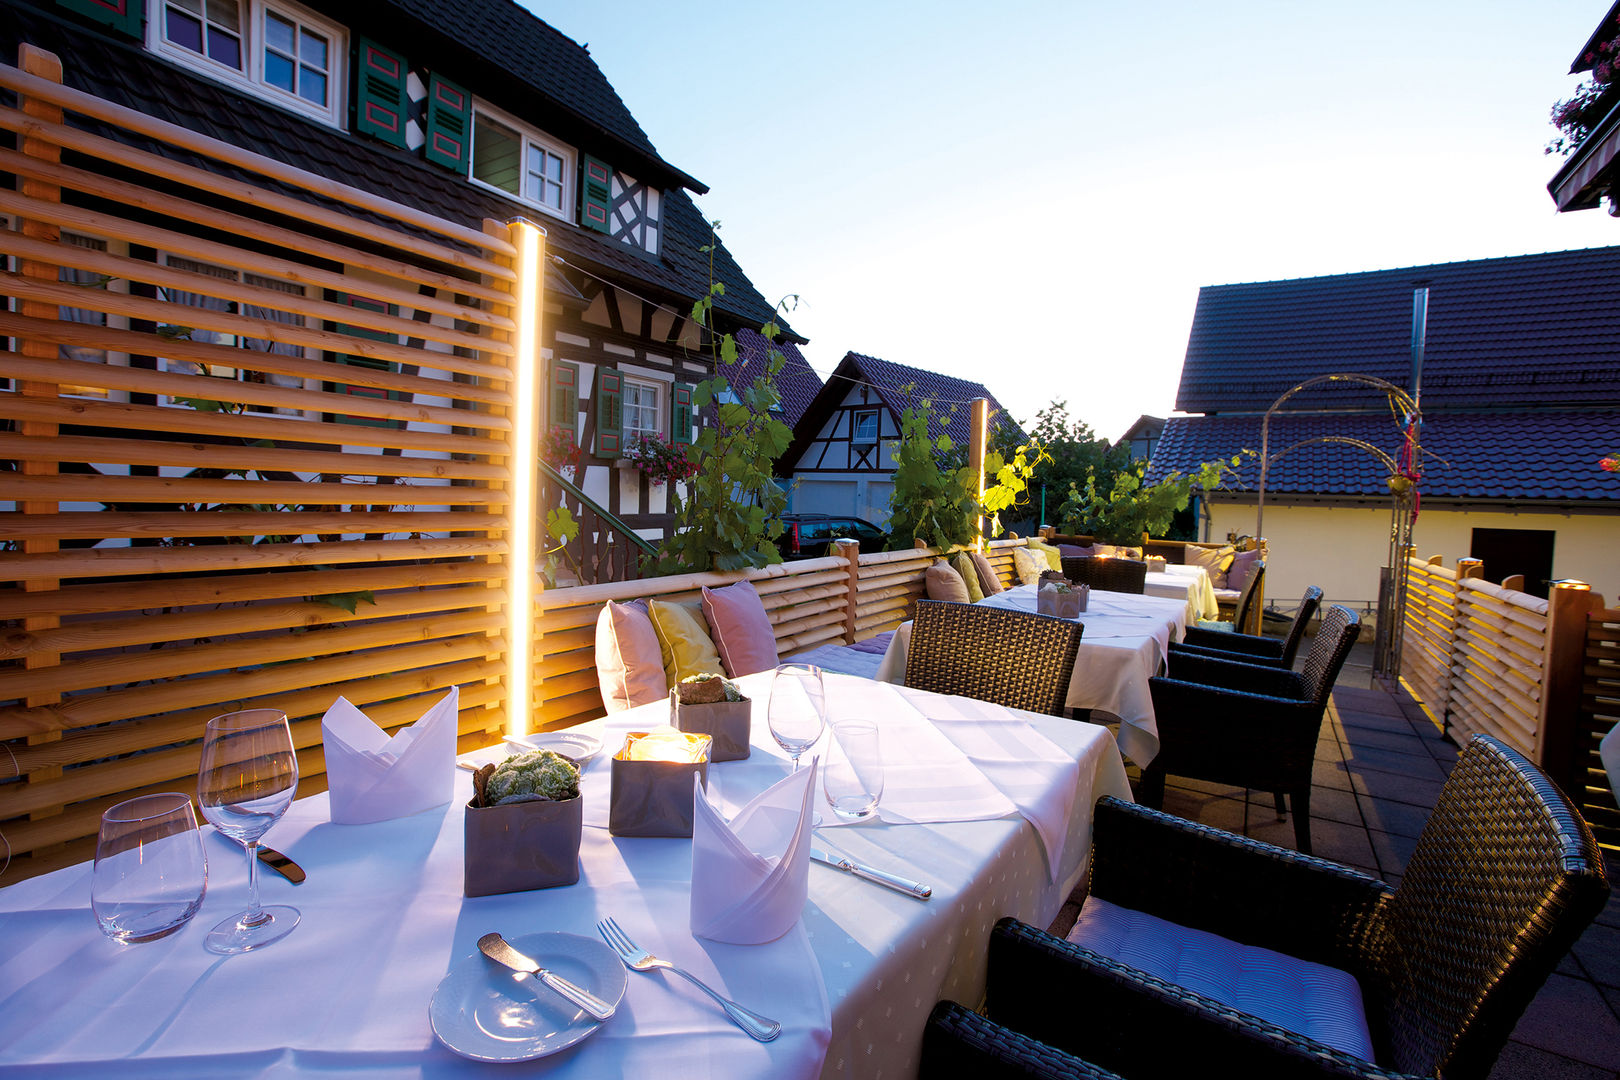 Dinner mit RomanticLite, Braun & Würfele - Holz im Garten Braun & Würfele - Holz im Garten Modern balcony, veranda & terrace Wood Wood effect